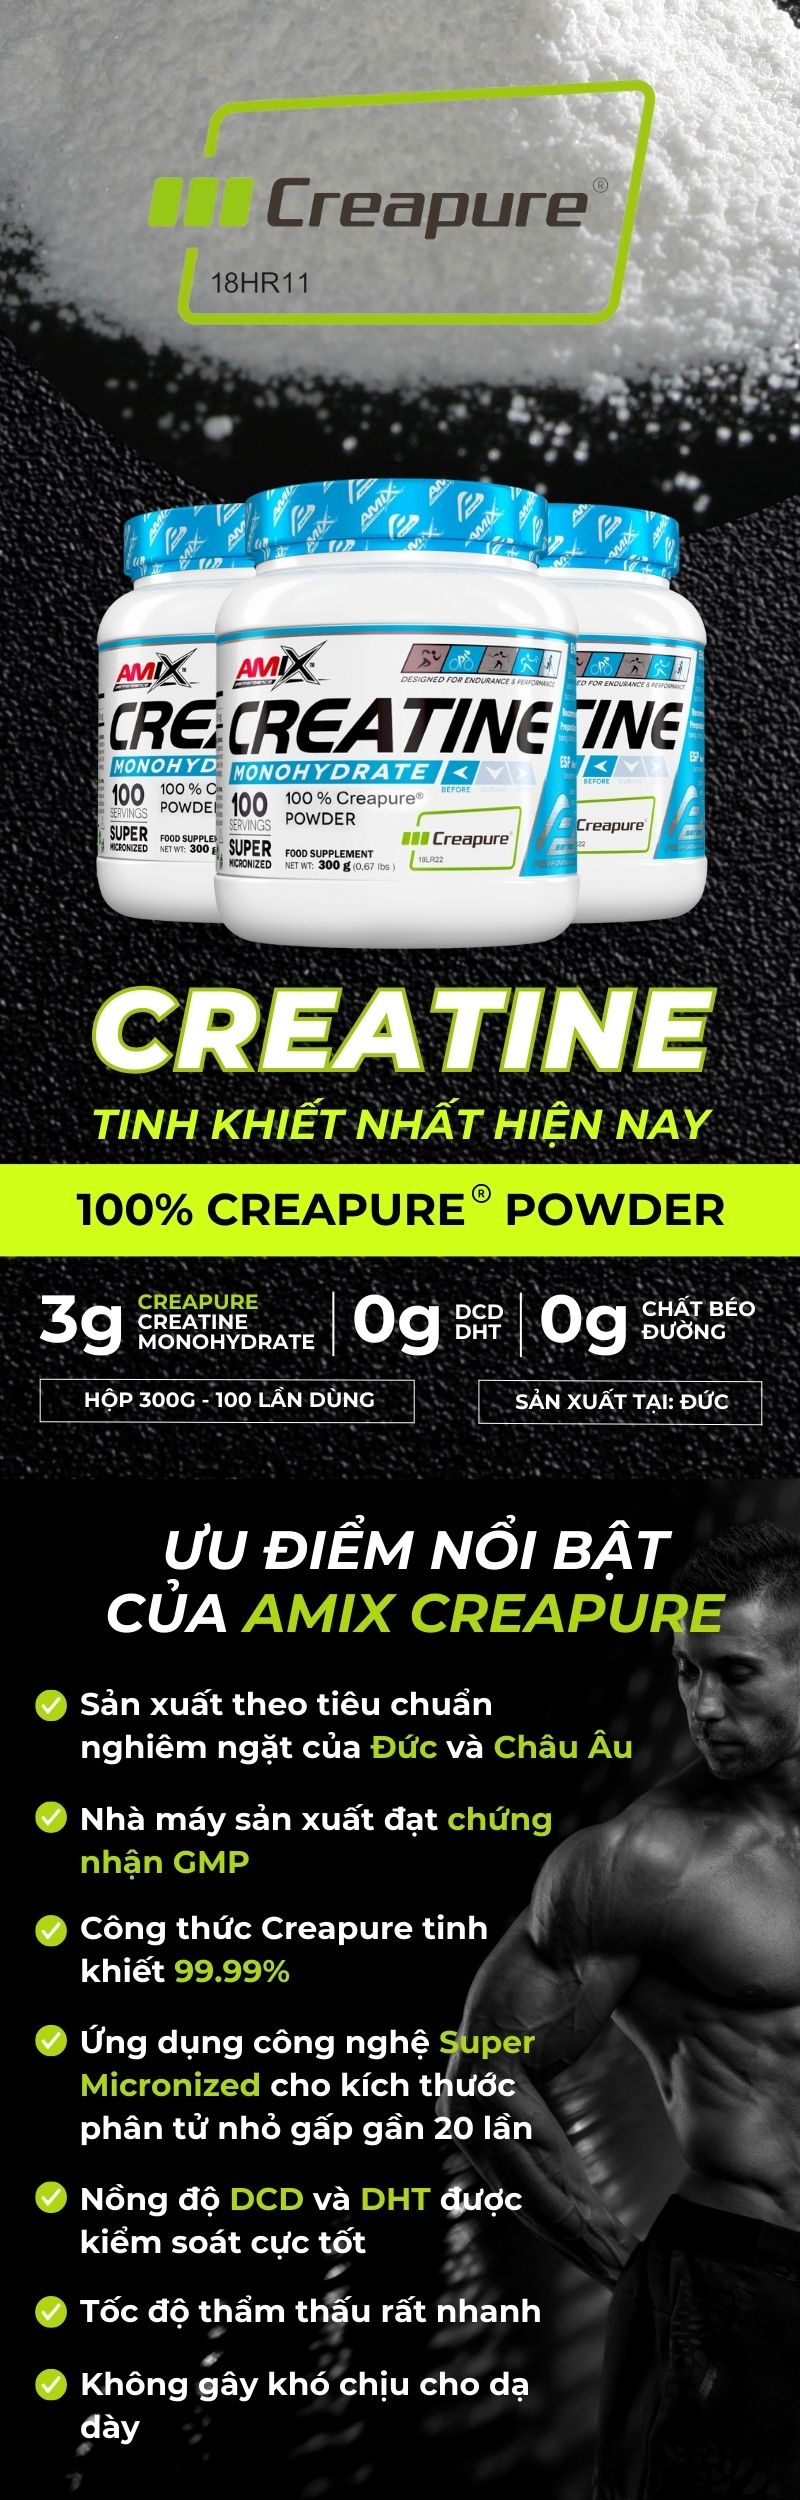 Ưu điểm nổi bật của Amix Creapure Creatine Monohydrate 300g